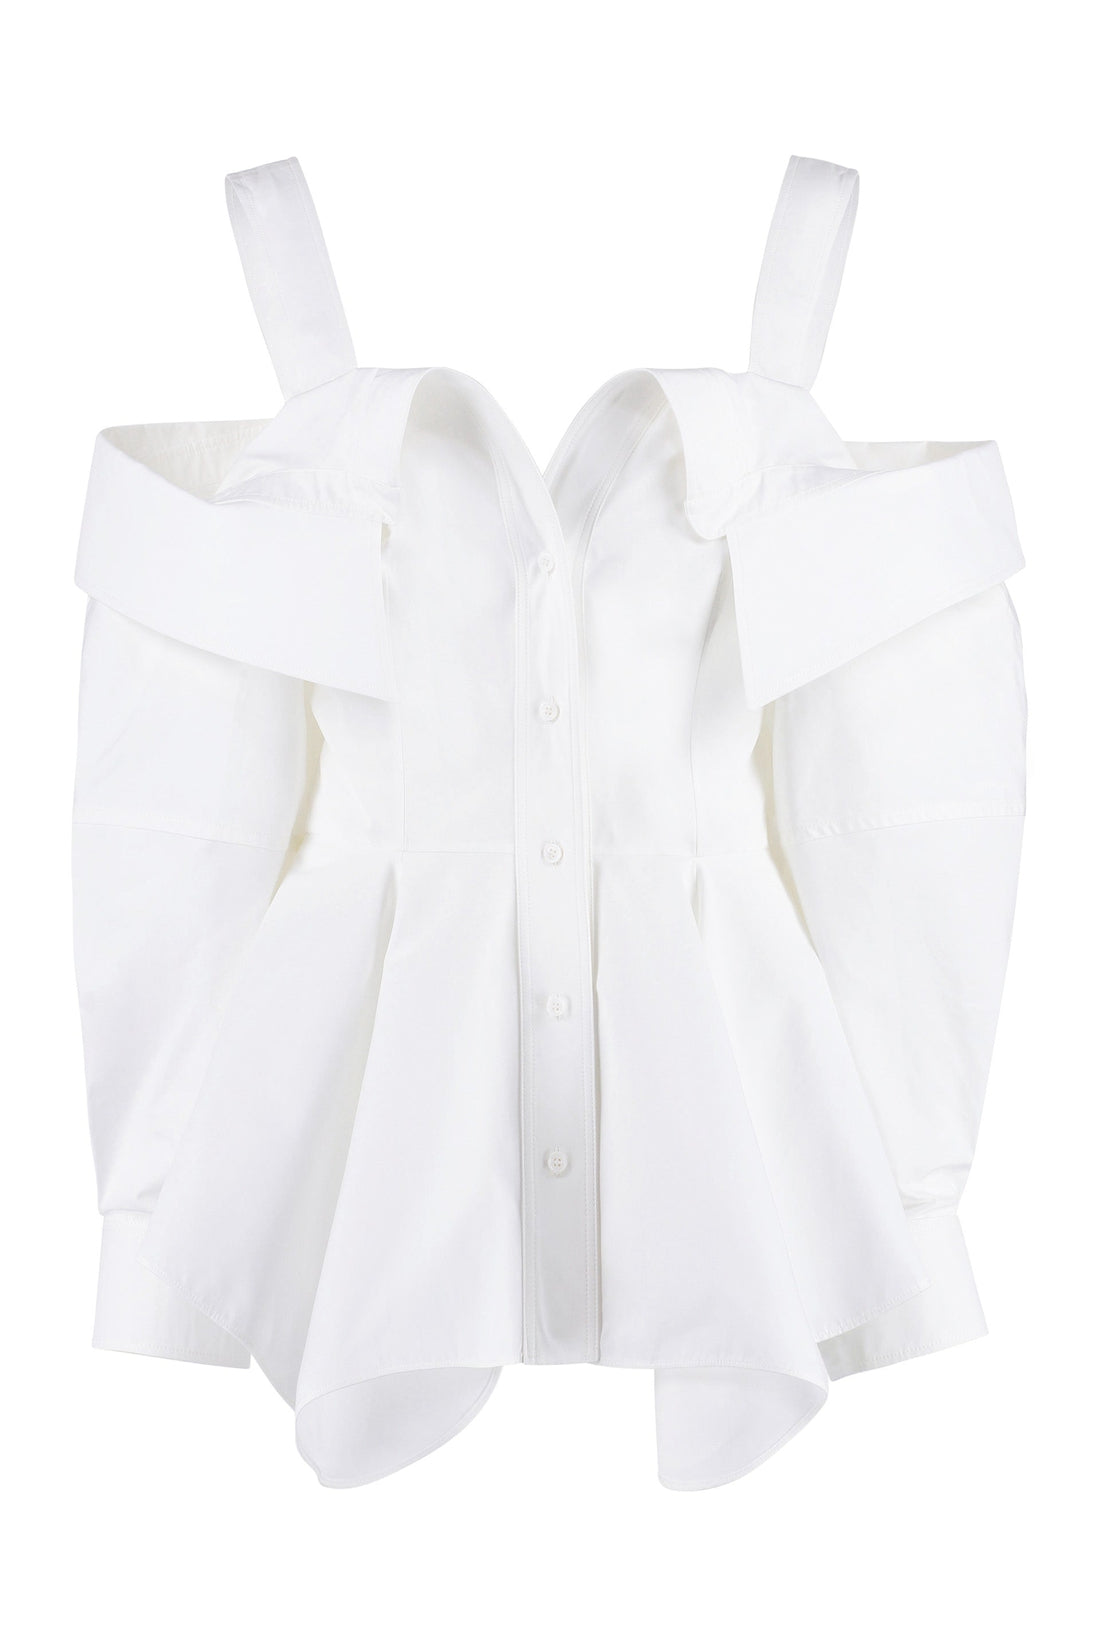 Alexander McQueen-OUTLET-SALE-Cotton poplin shirt-ARCHIVIST